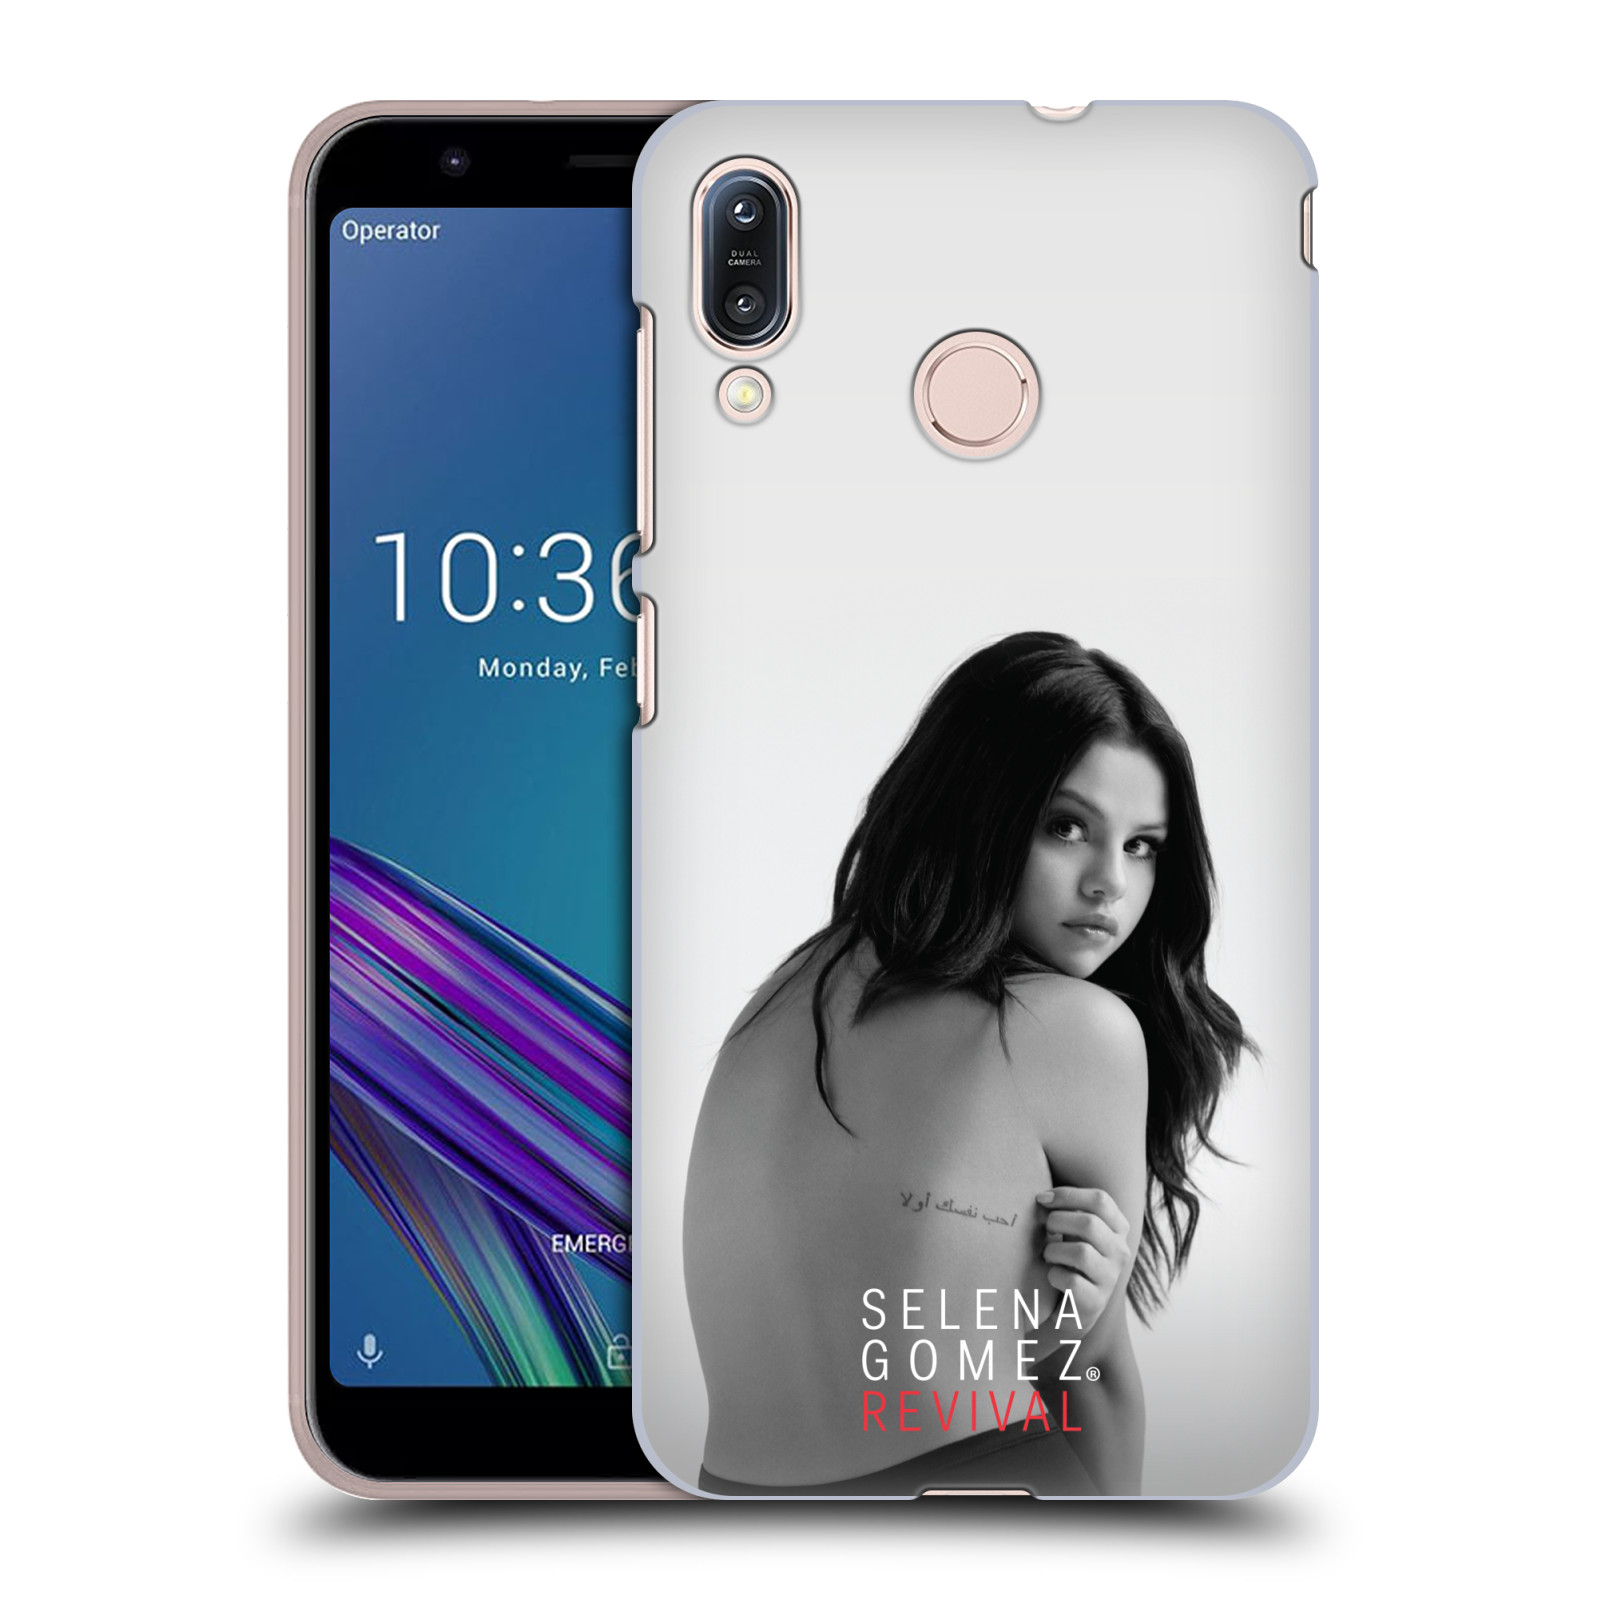 Pouzdro na mobil Asus Zenfone Max M1 (ZB555KL) - HEAD CASE - Zpěvačka Selena Gomez foto Revival zadní strana